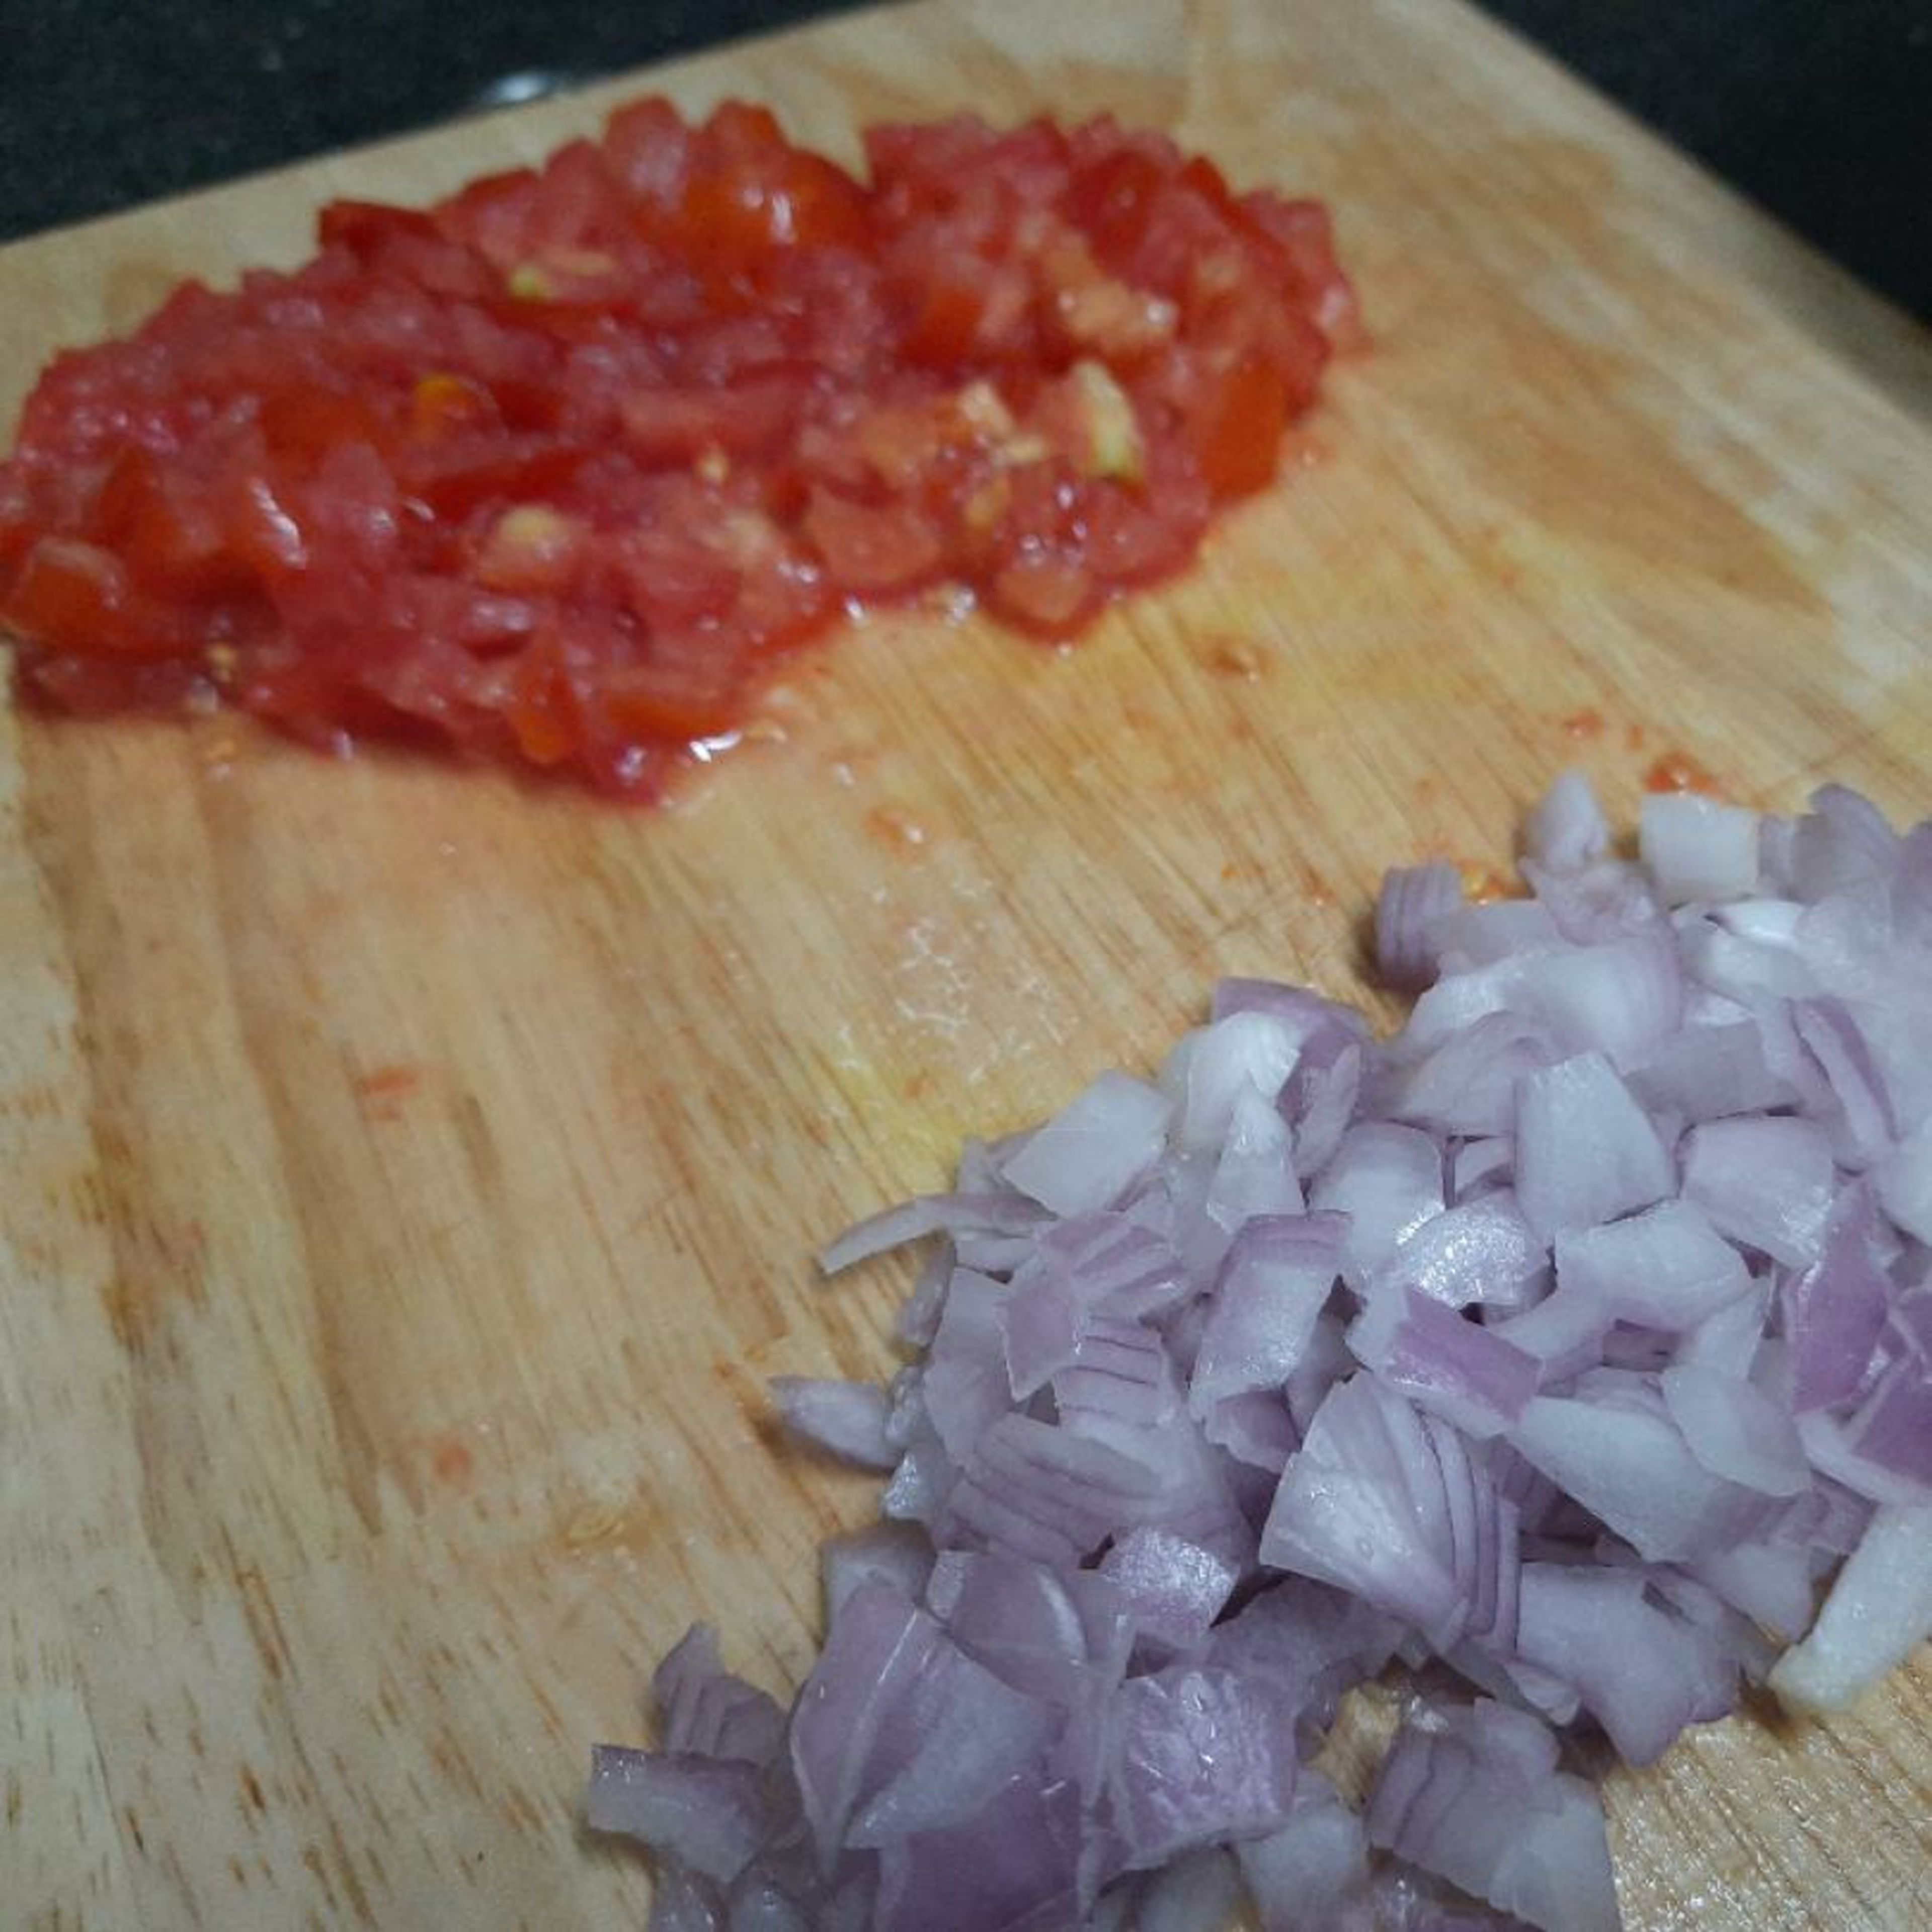 Cut 1 large onion and 1 large tomato.